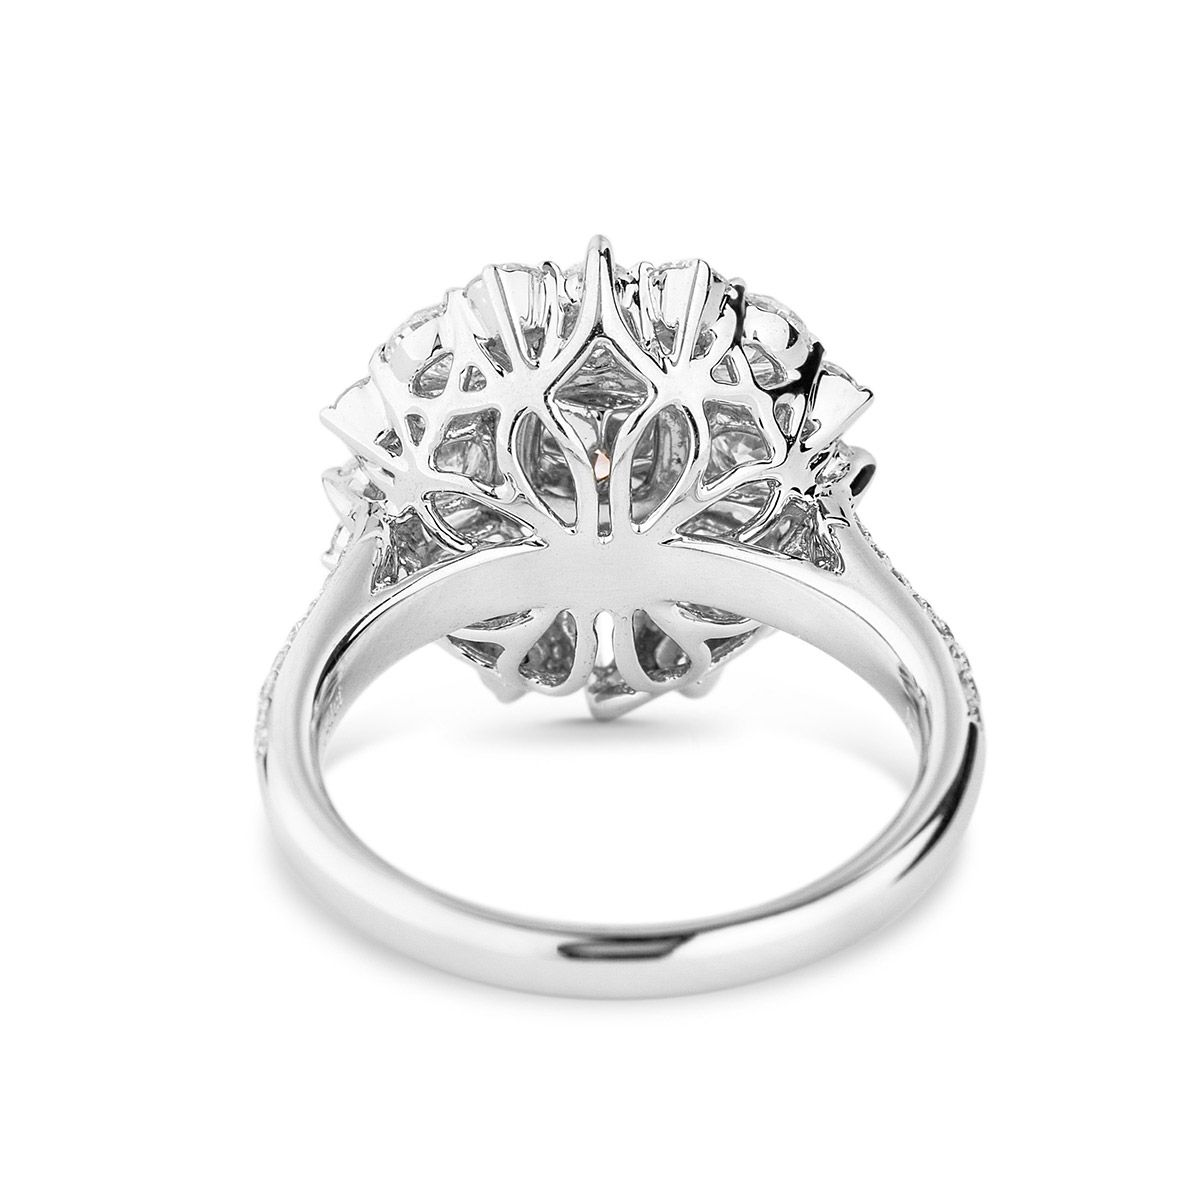 Light Pink Diamond Ring, 0.51 Ct. (2.64 Ct. TW), Cushion shape, GIA Certified, 2185454657